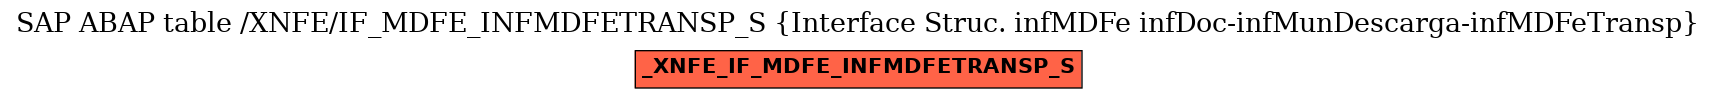 E-R Diagram for table /XNFE/IF_MDFE_INFMDFETRANSP_S (Interface Struc. infMDFe infDoc-infMunDescarga-infMDFeTransp)